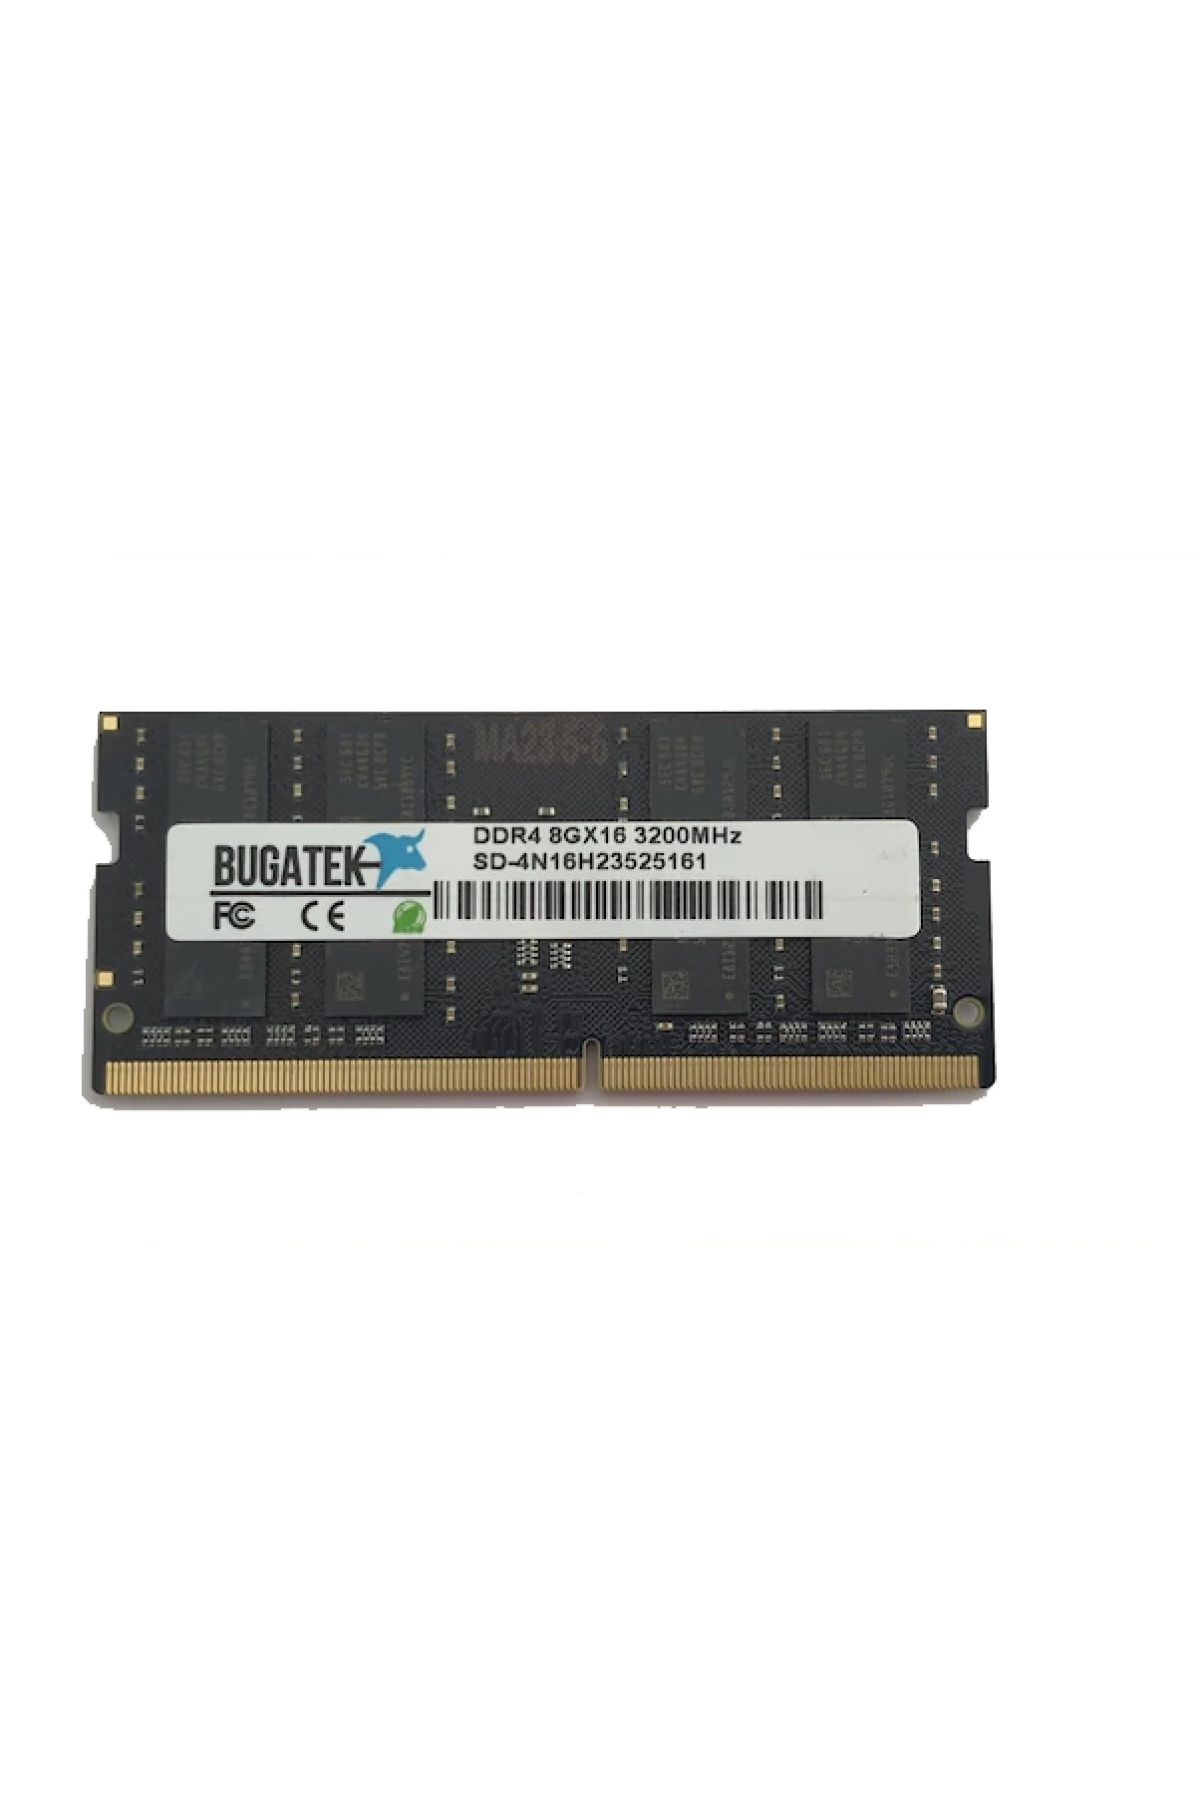 jetucuzal 8GB DDR4 3200MHz Laptop Notebook Ram